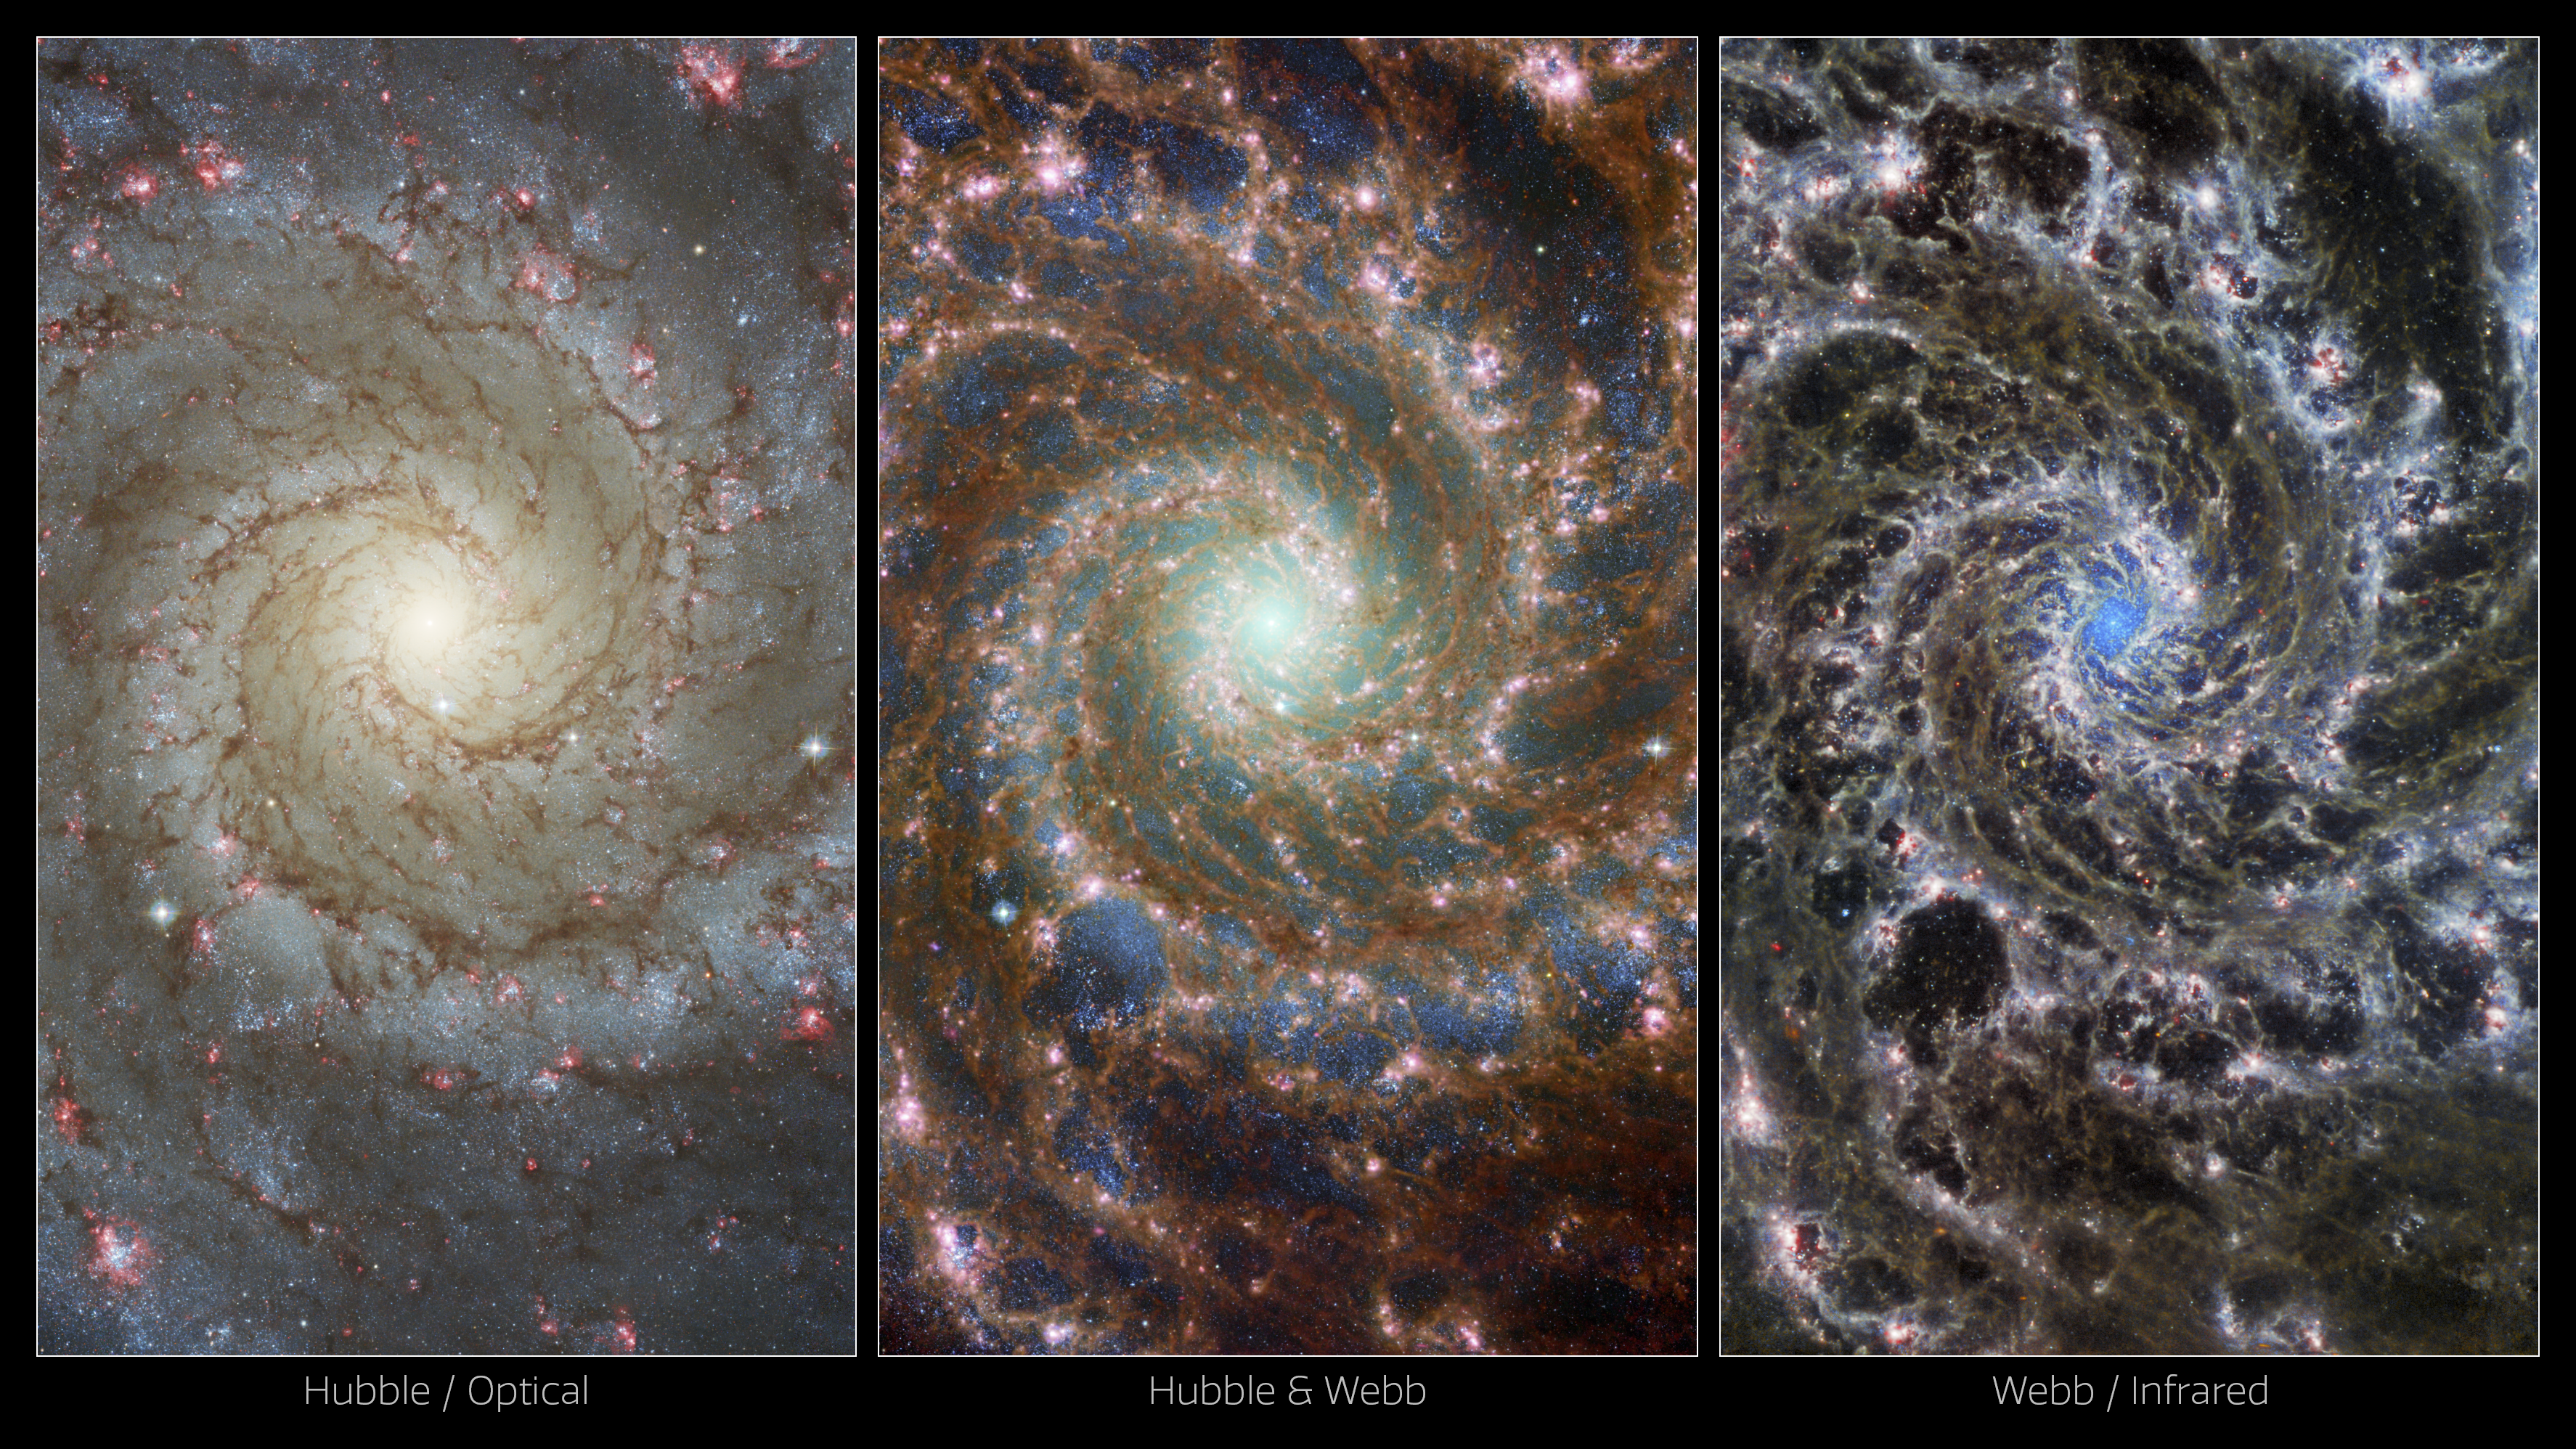 Webb Telescope Captures the Bamboozling Beauty of the Phantom Galaxy